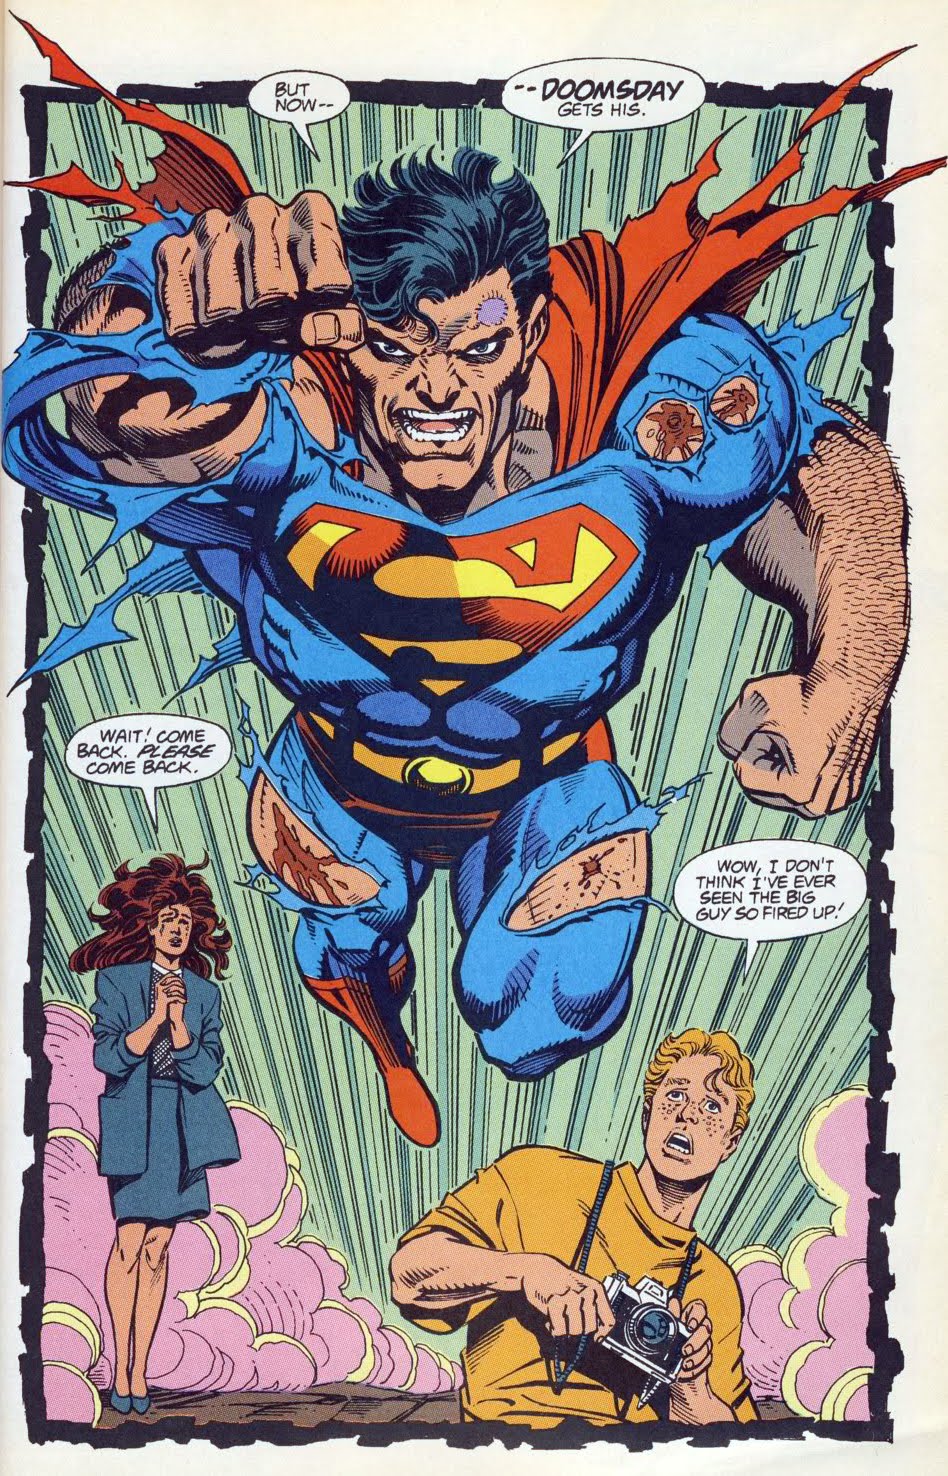 Favorite superhero moment?, page 2